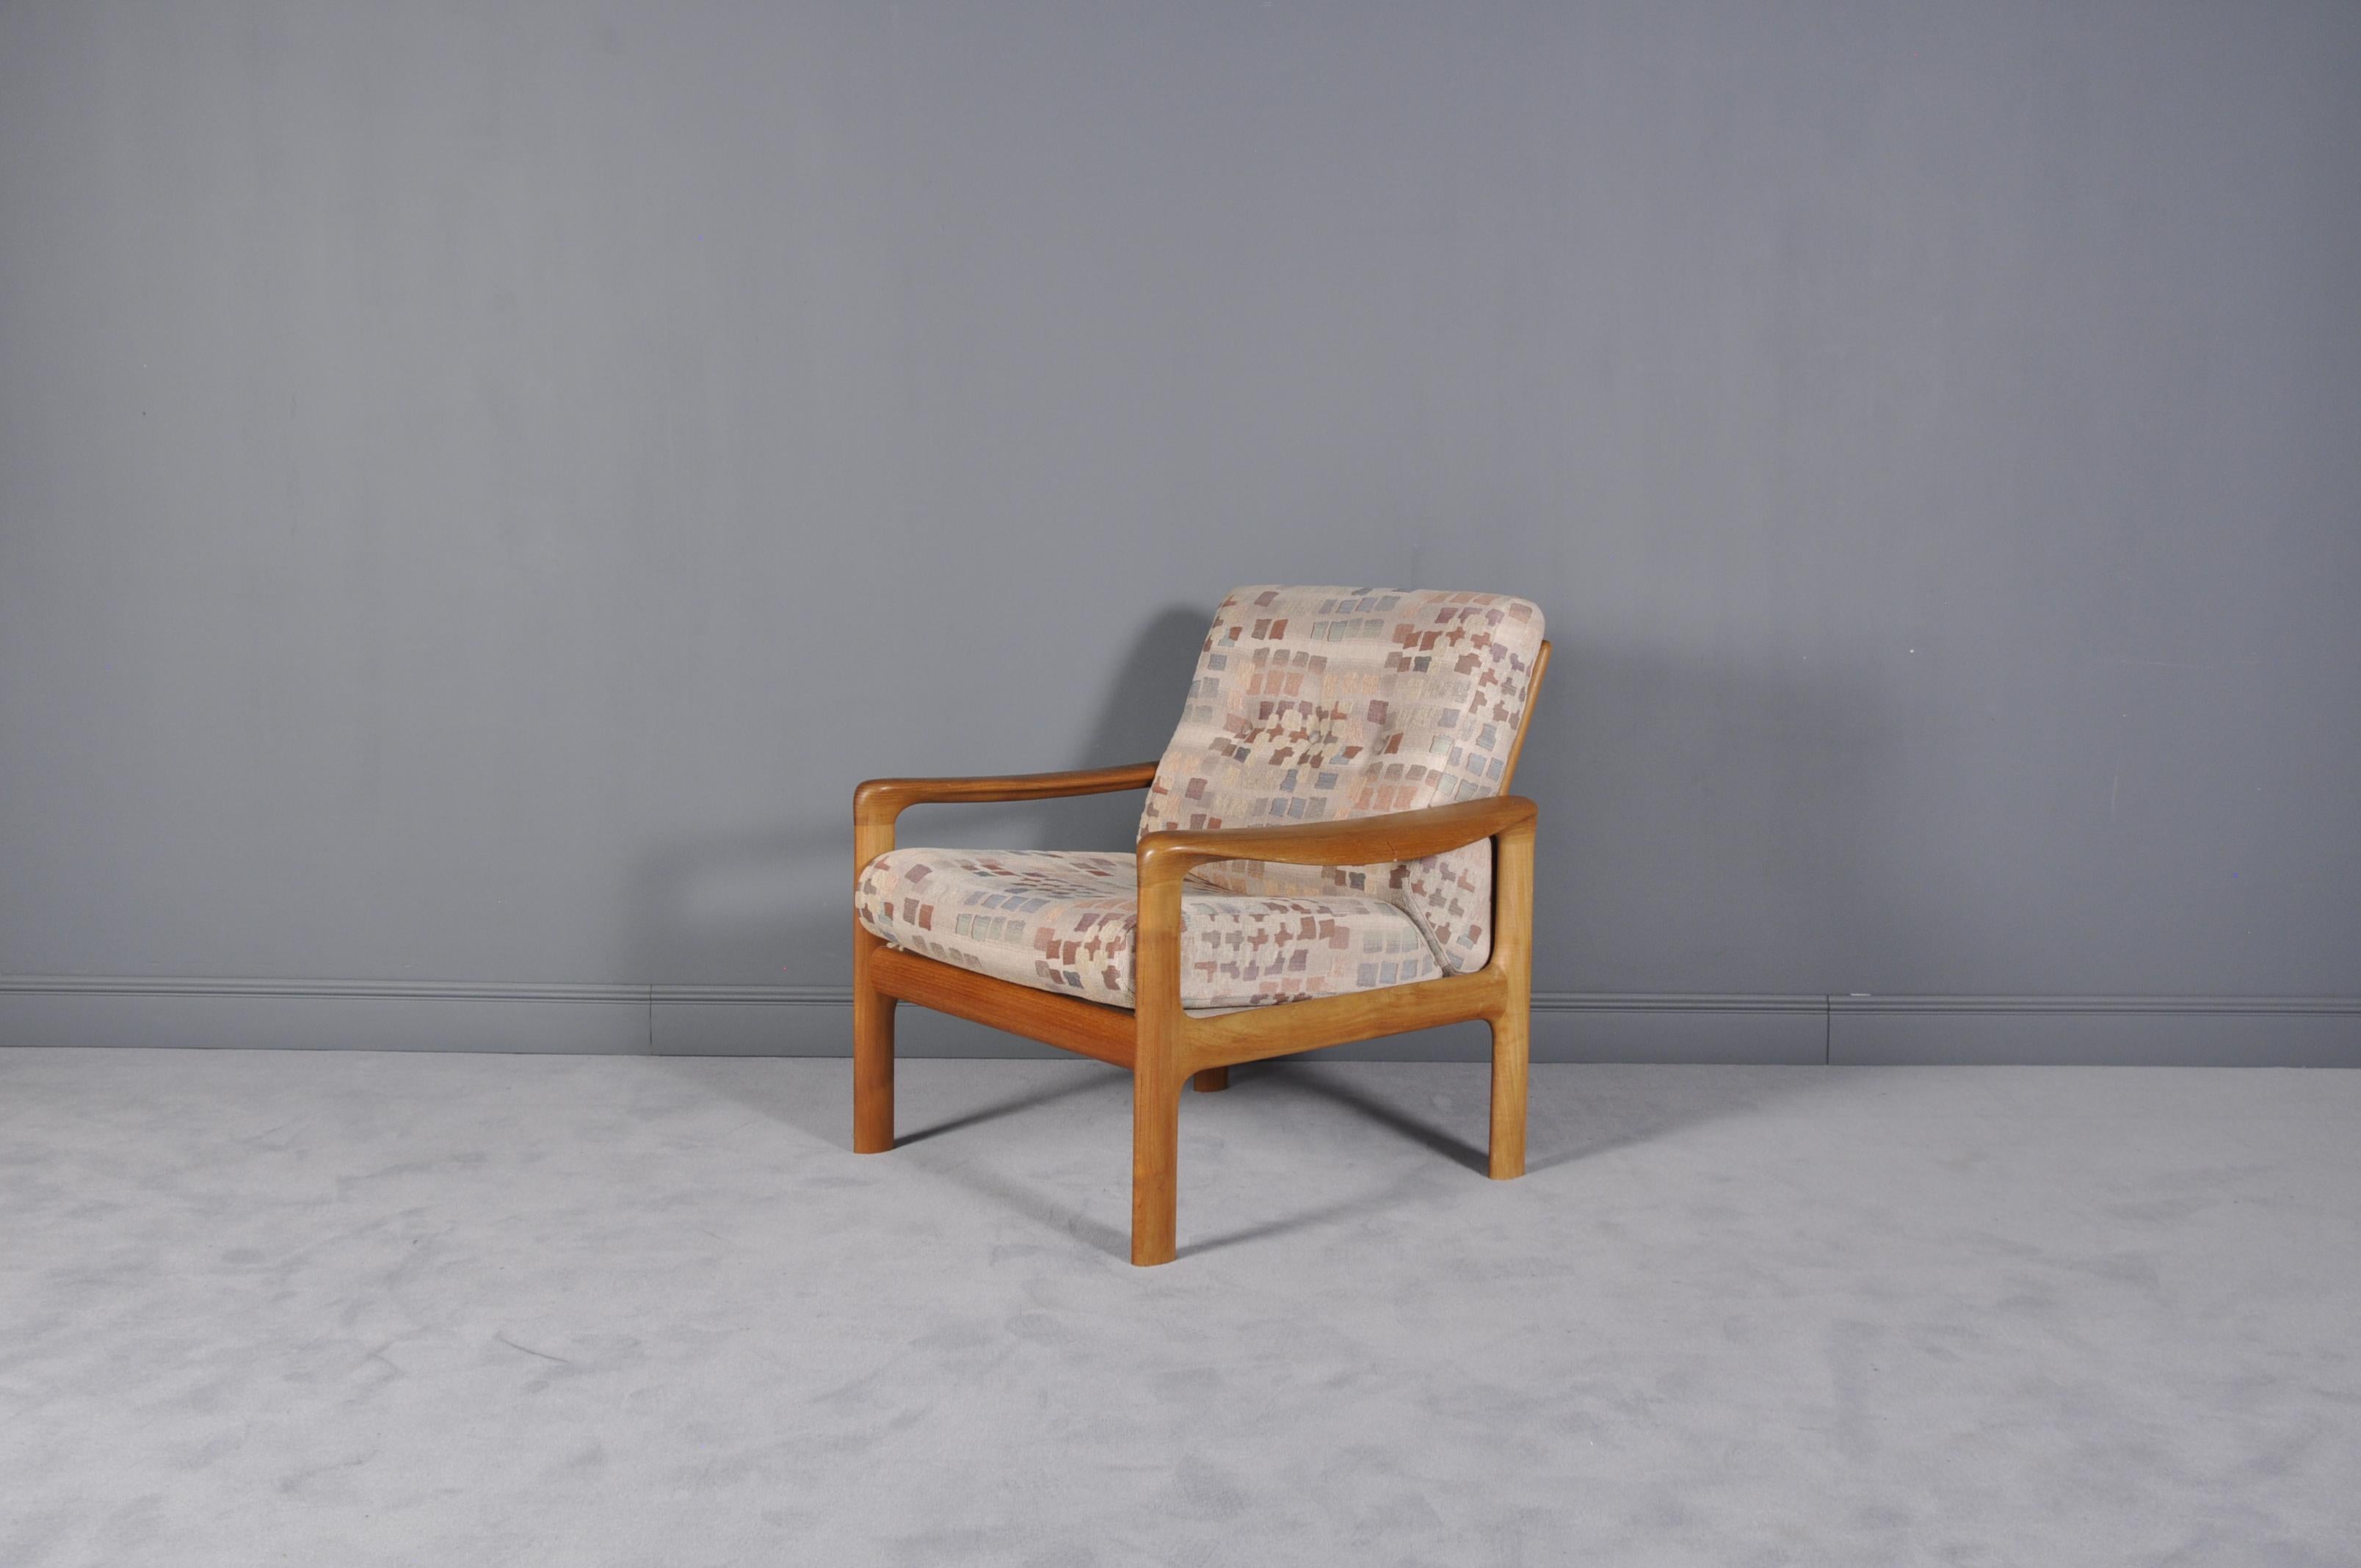 Teak lounge chair by Sven Ellekaer for Komfort, 1960s.